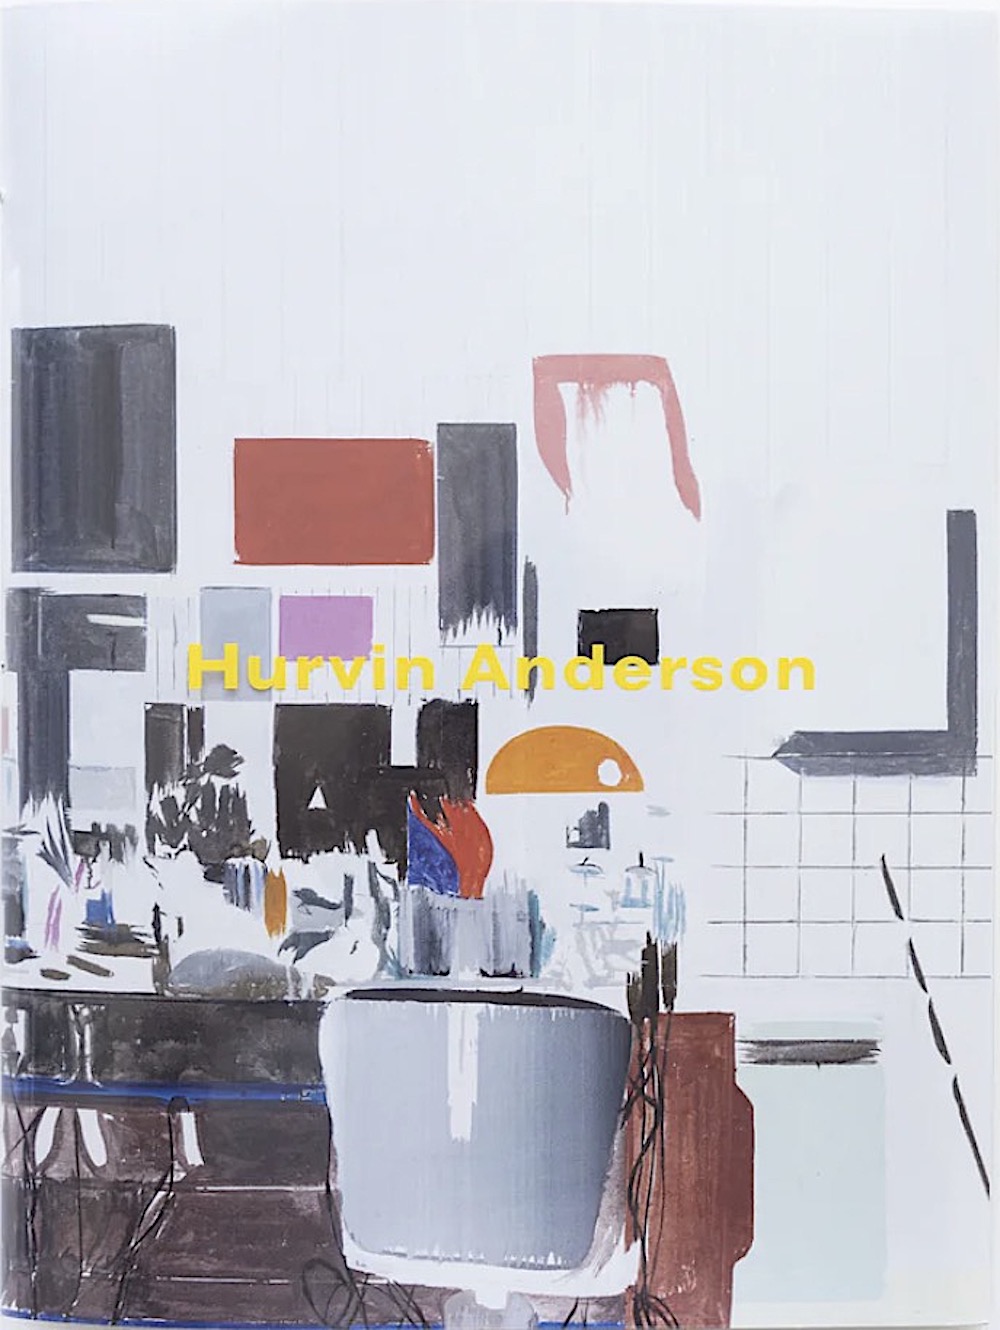 Hurvin Anderson, Salon Paintings